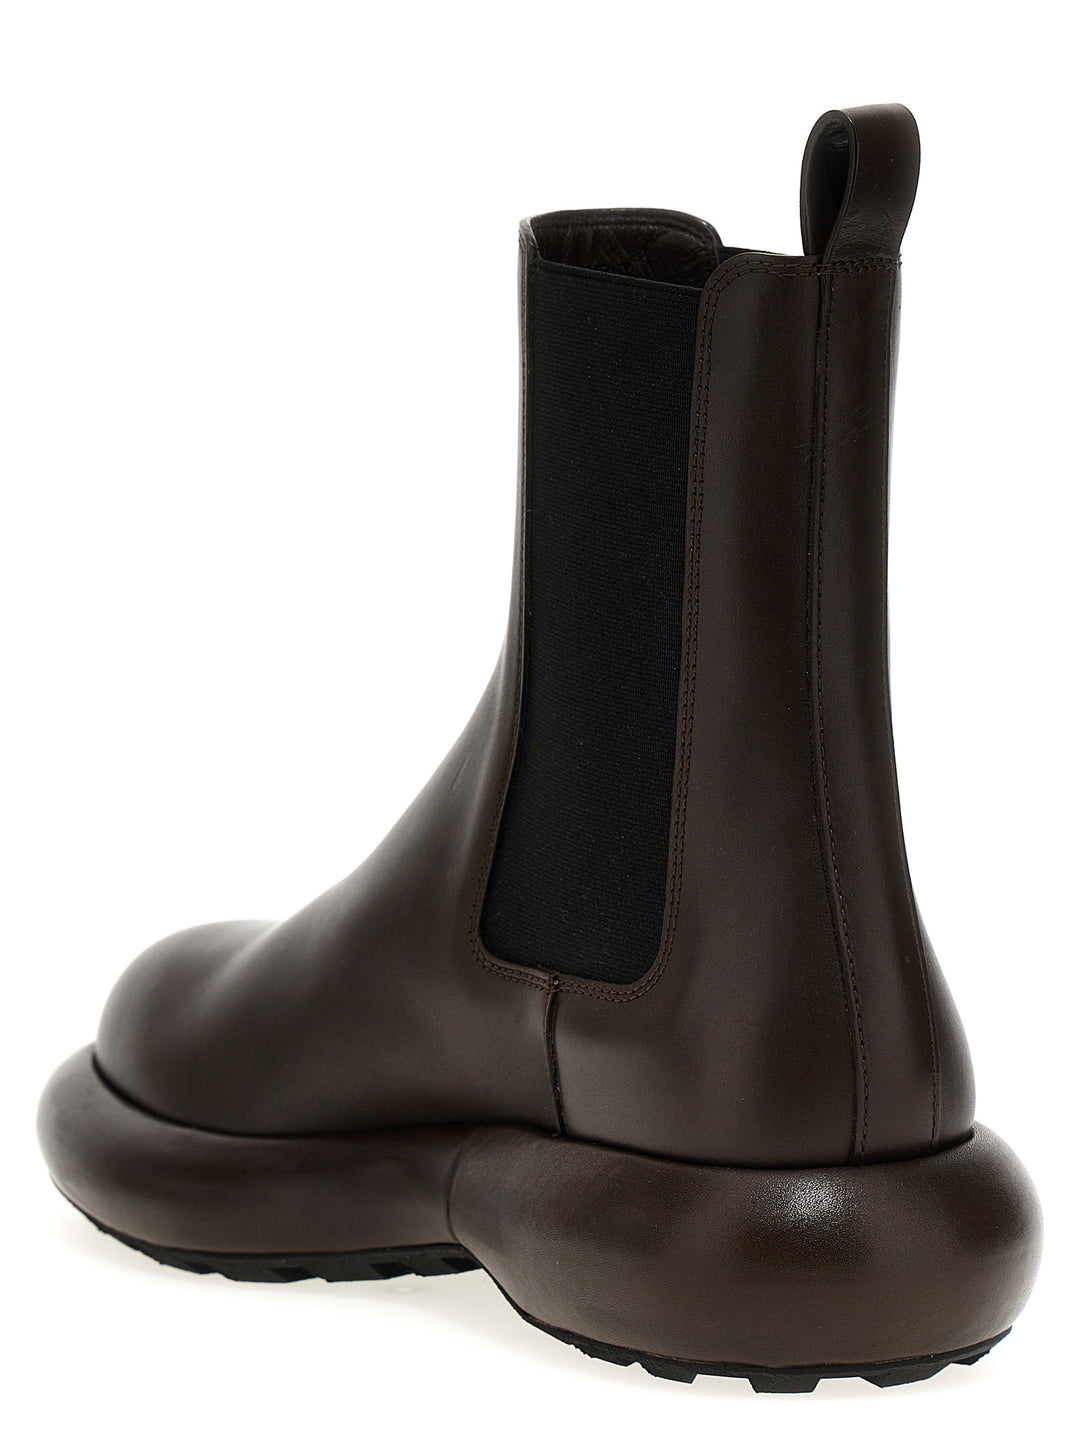 Chelsea Leather Ankle Boots Stivali E Stivaletti Marrone